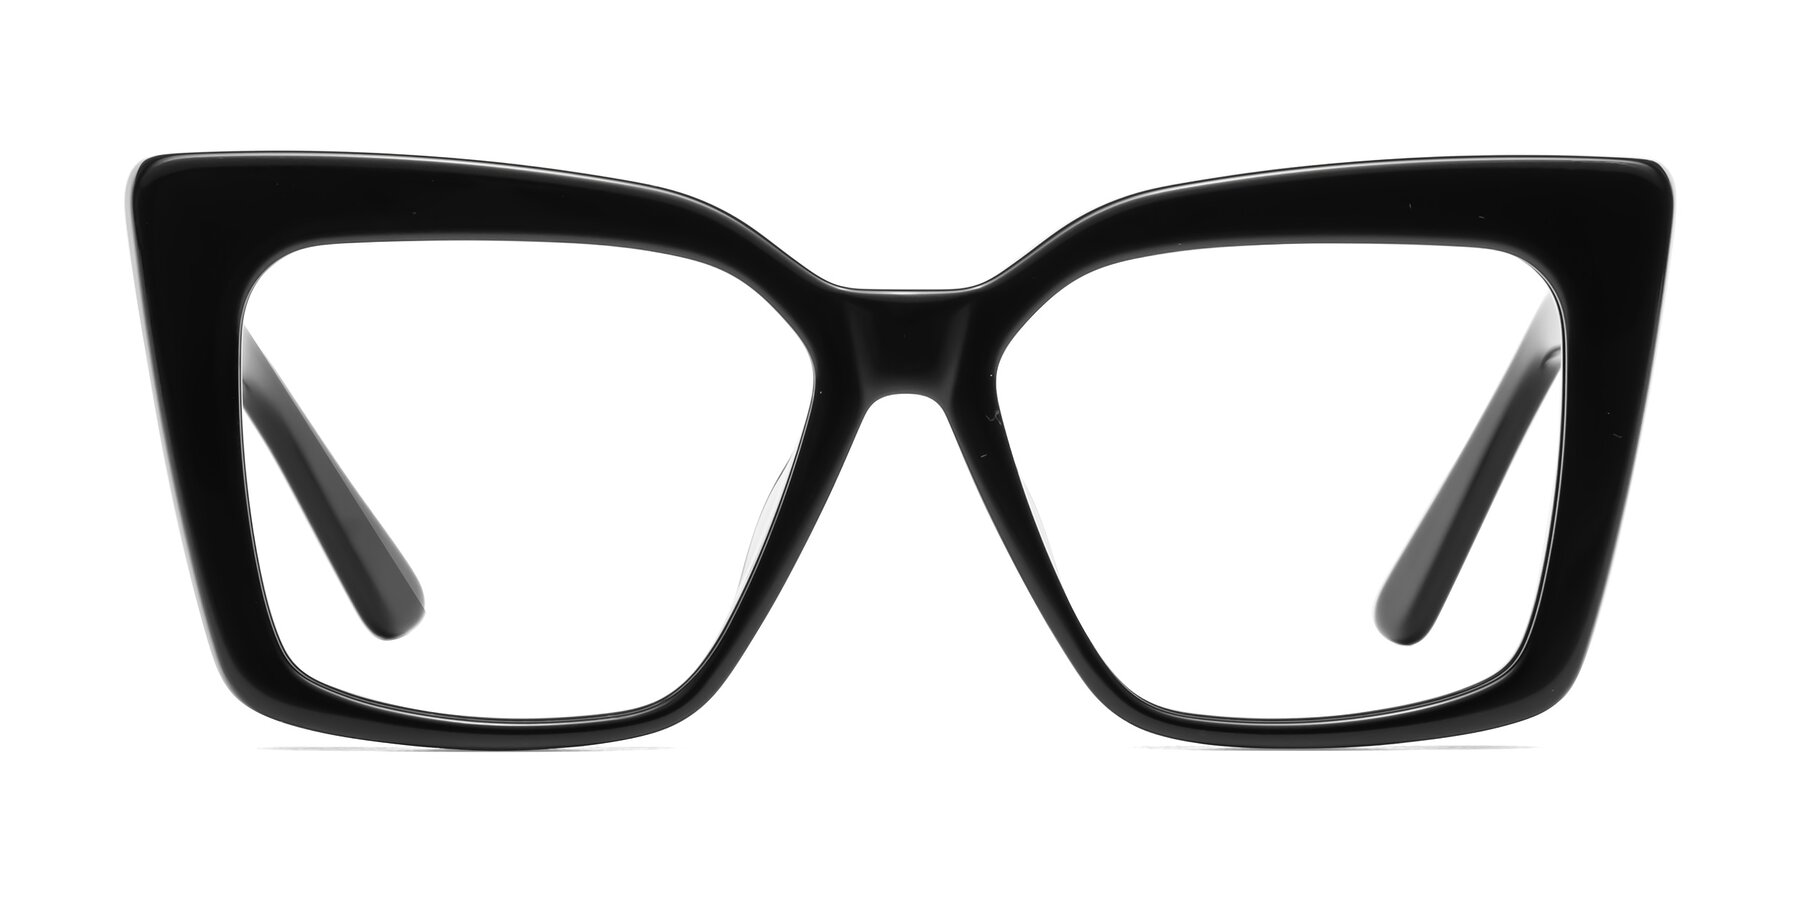 Hagen - Black Sunglasses Frame